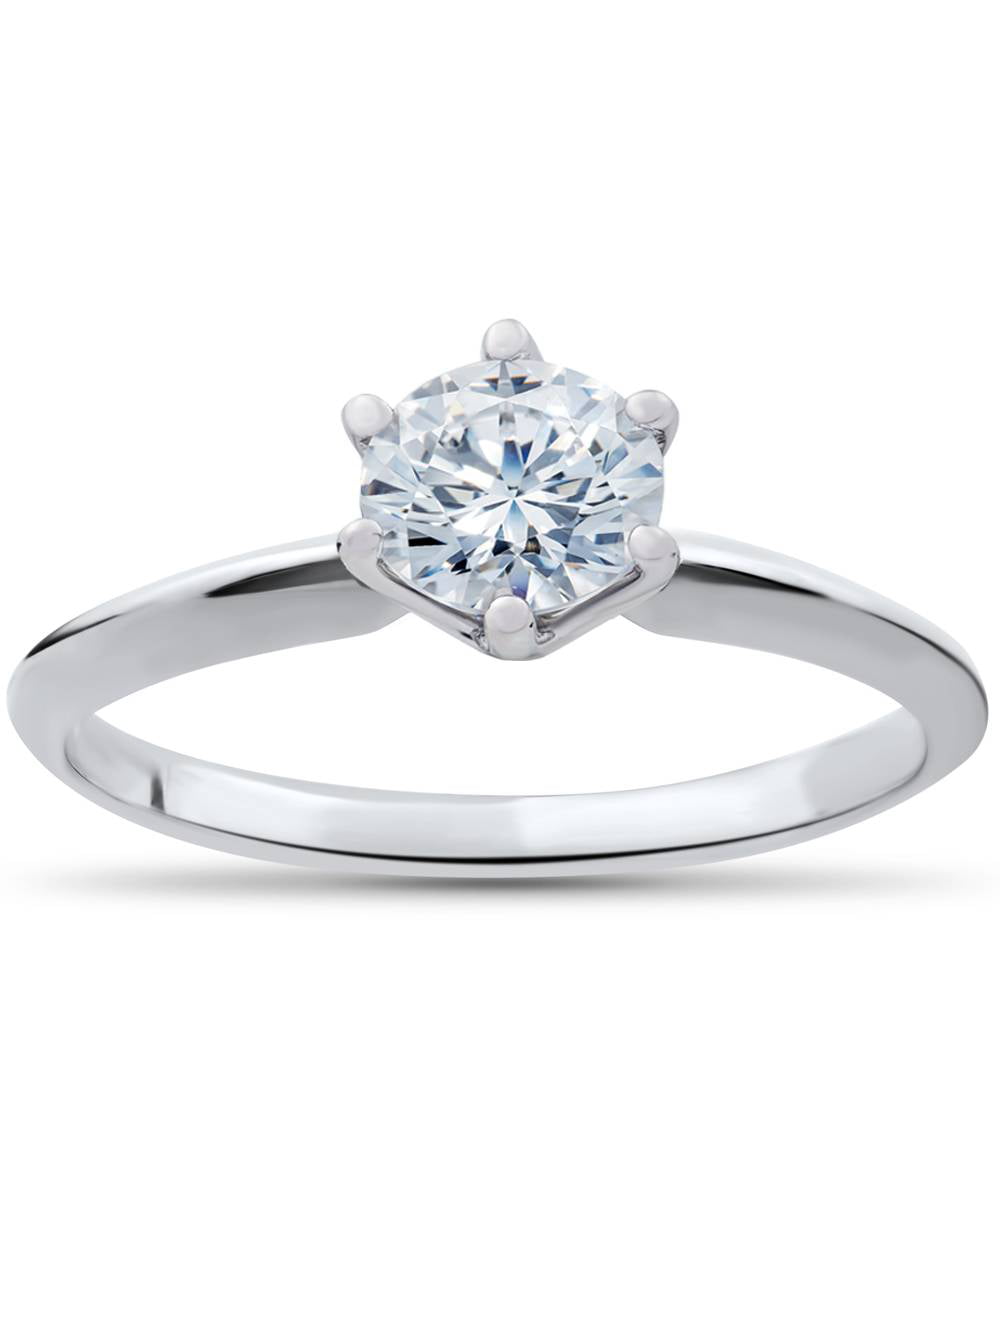 2 Ct Classic Round Cut Diamond Engagement Ring 14k White Gold Enhanced 